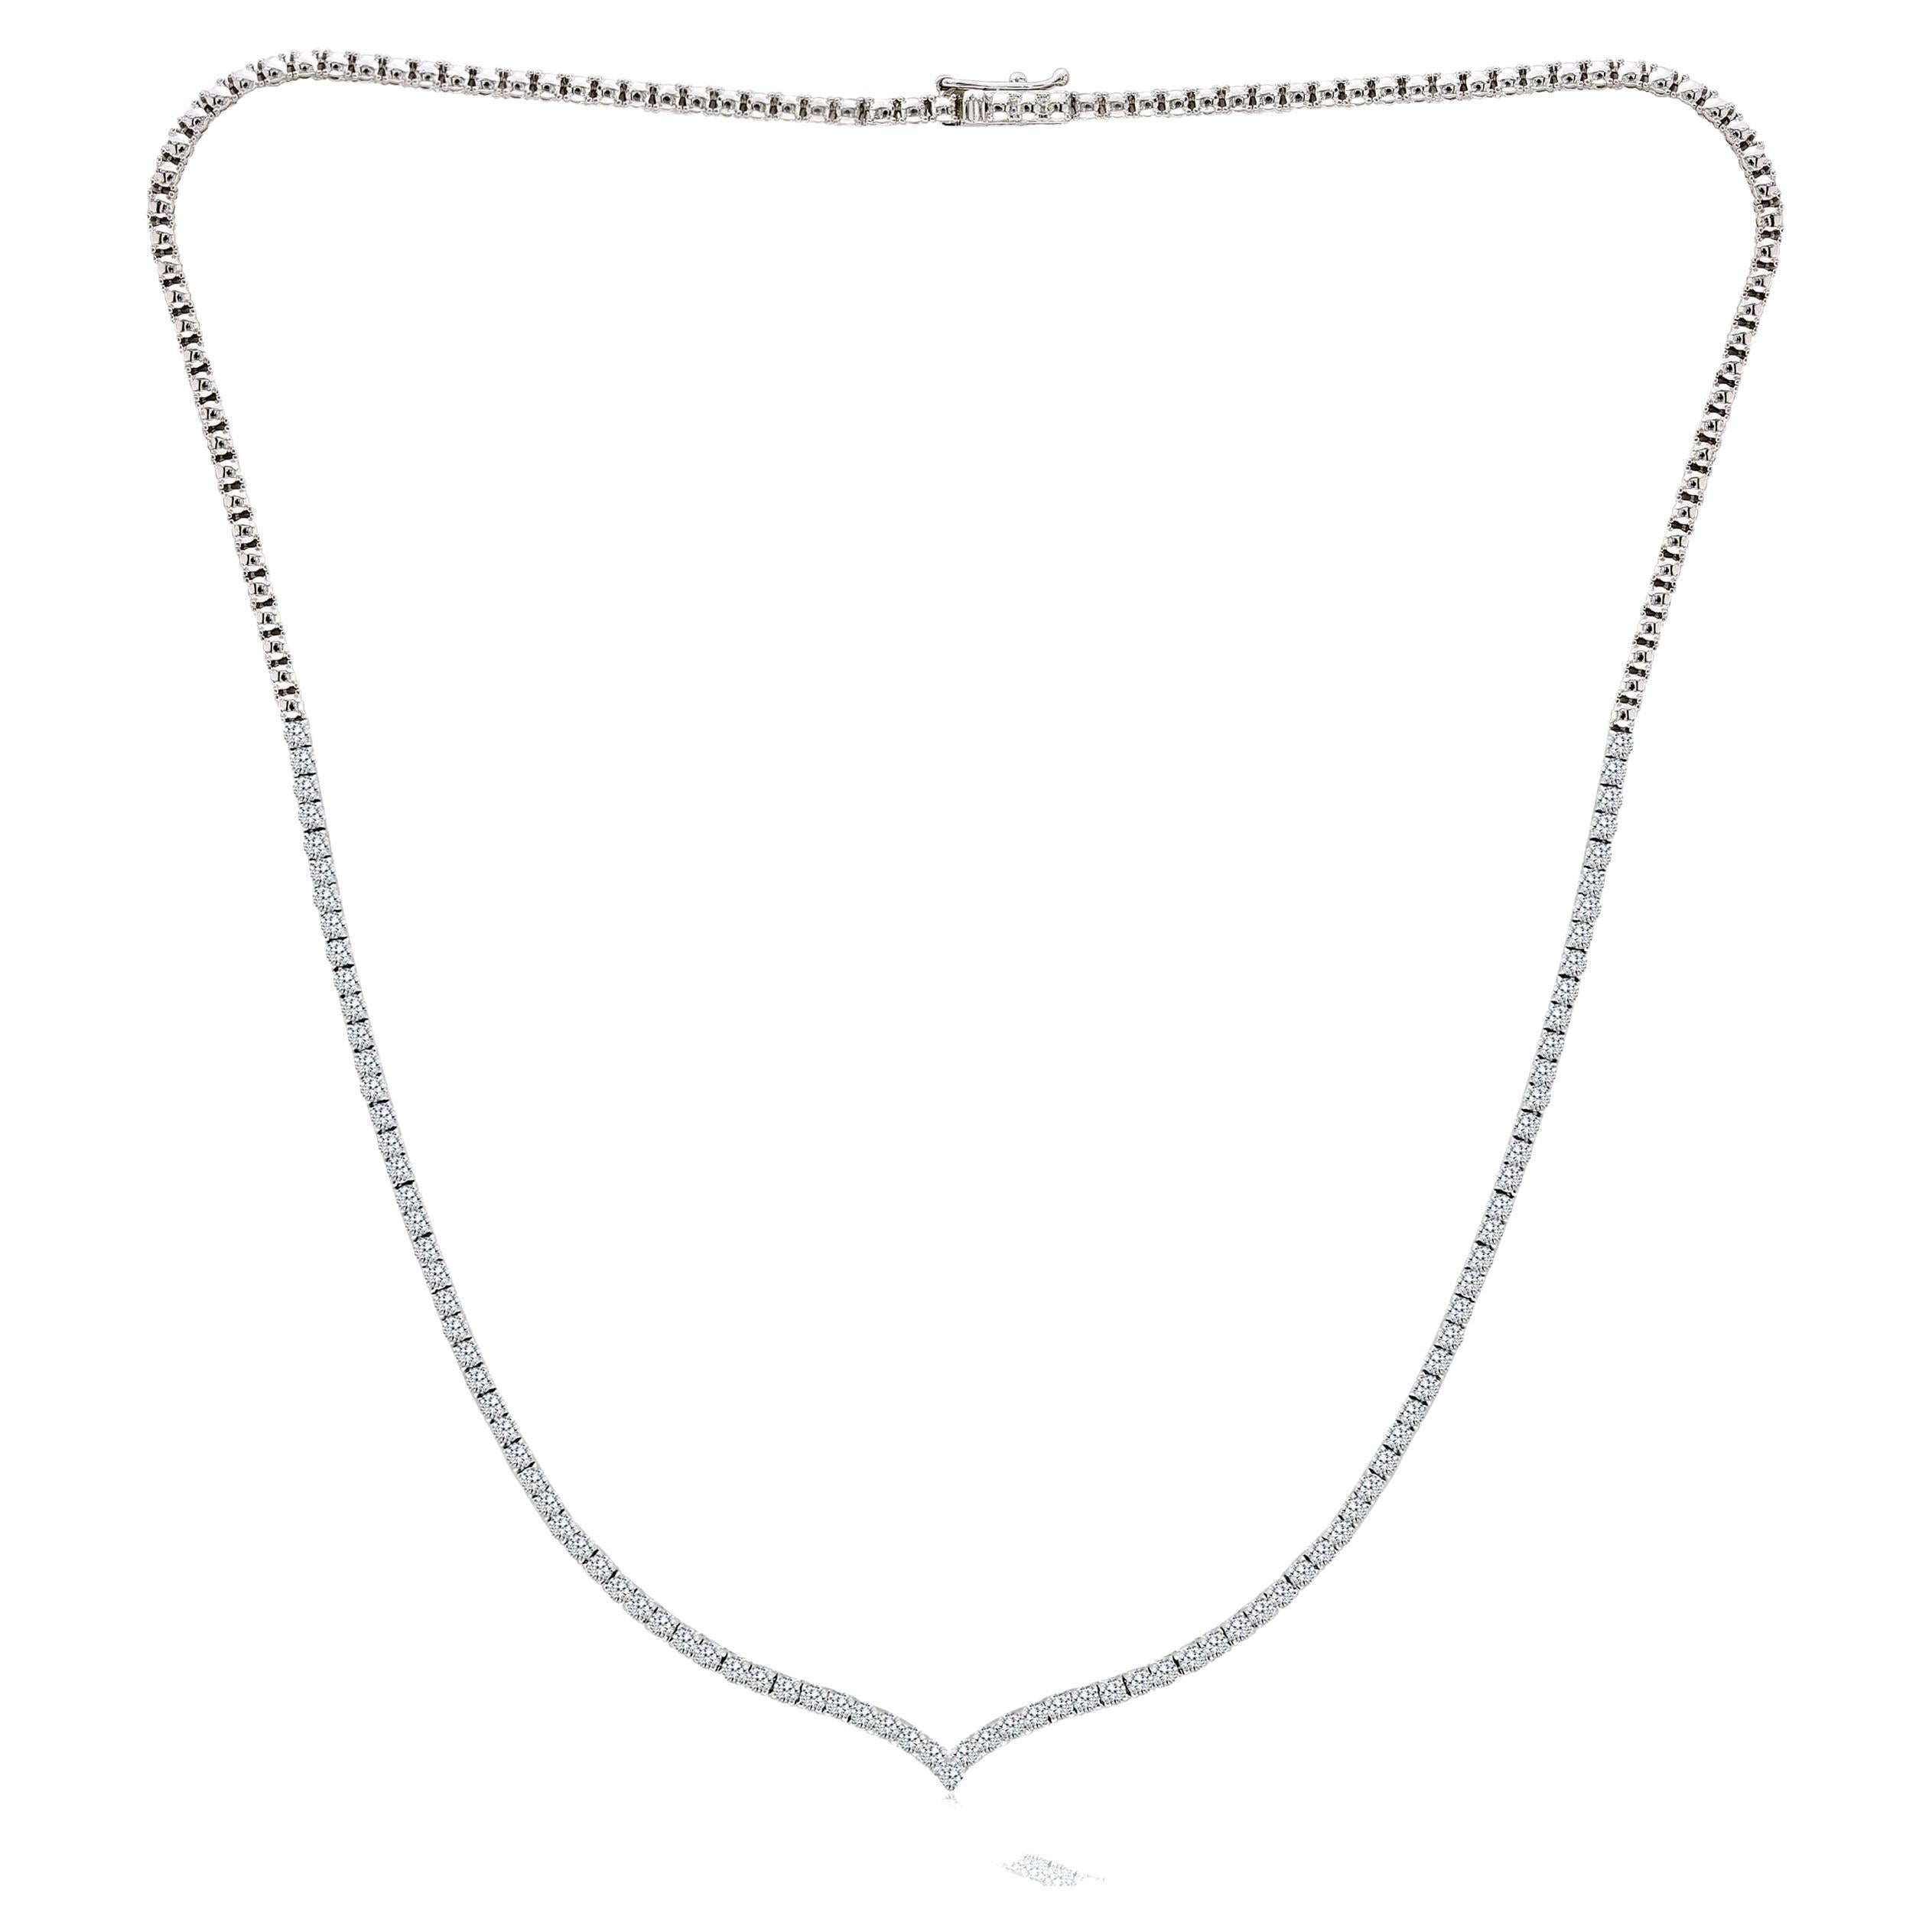 3 Carat Diamond Tennis Necklace in 14K White Gold